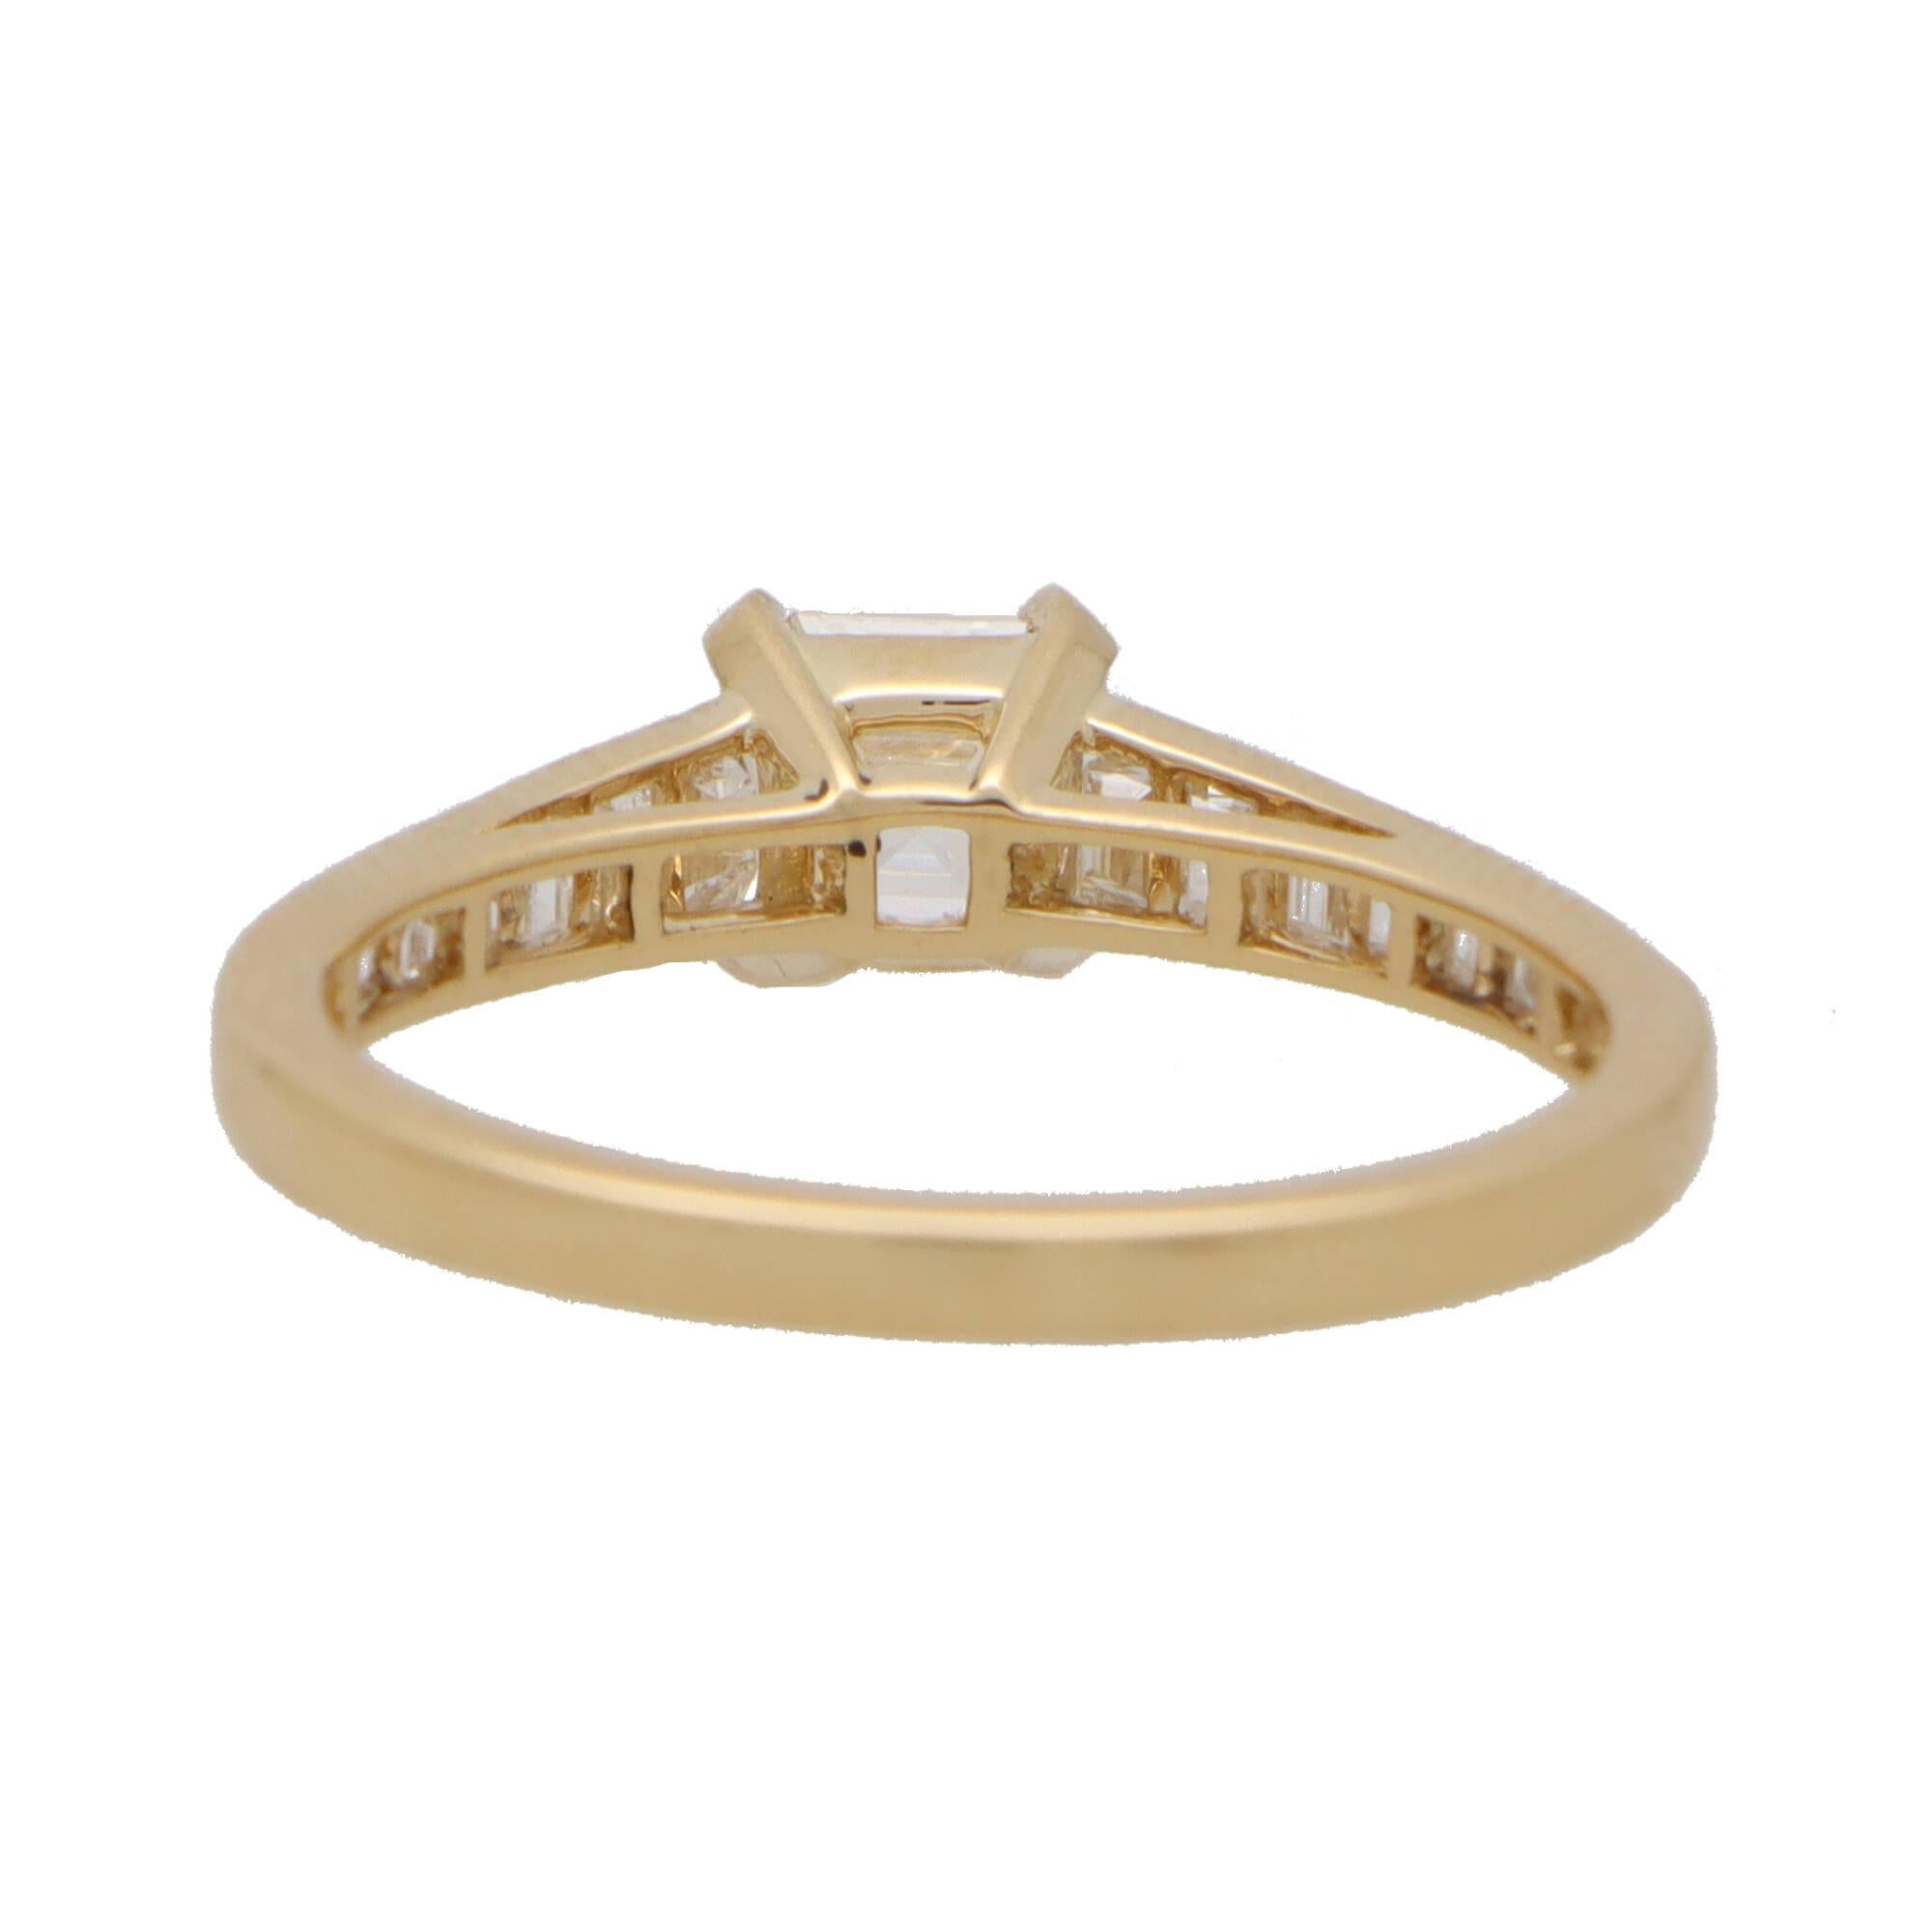 Art Deco Inspired Asscher Cut Diamond Ring in 18k Yellow Gold For Sale 1